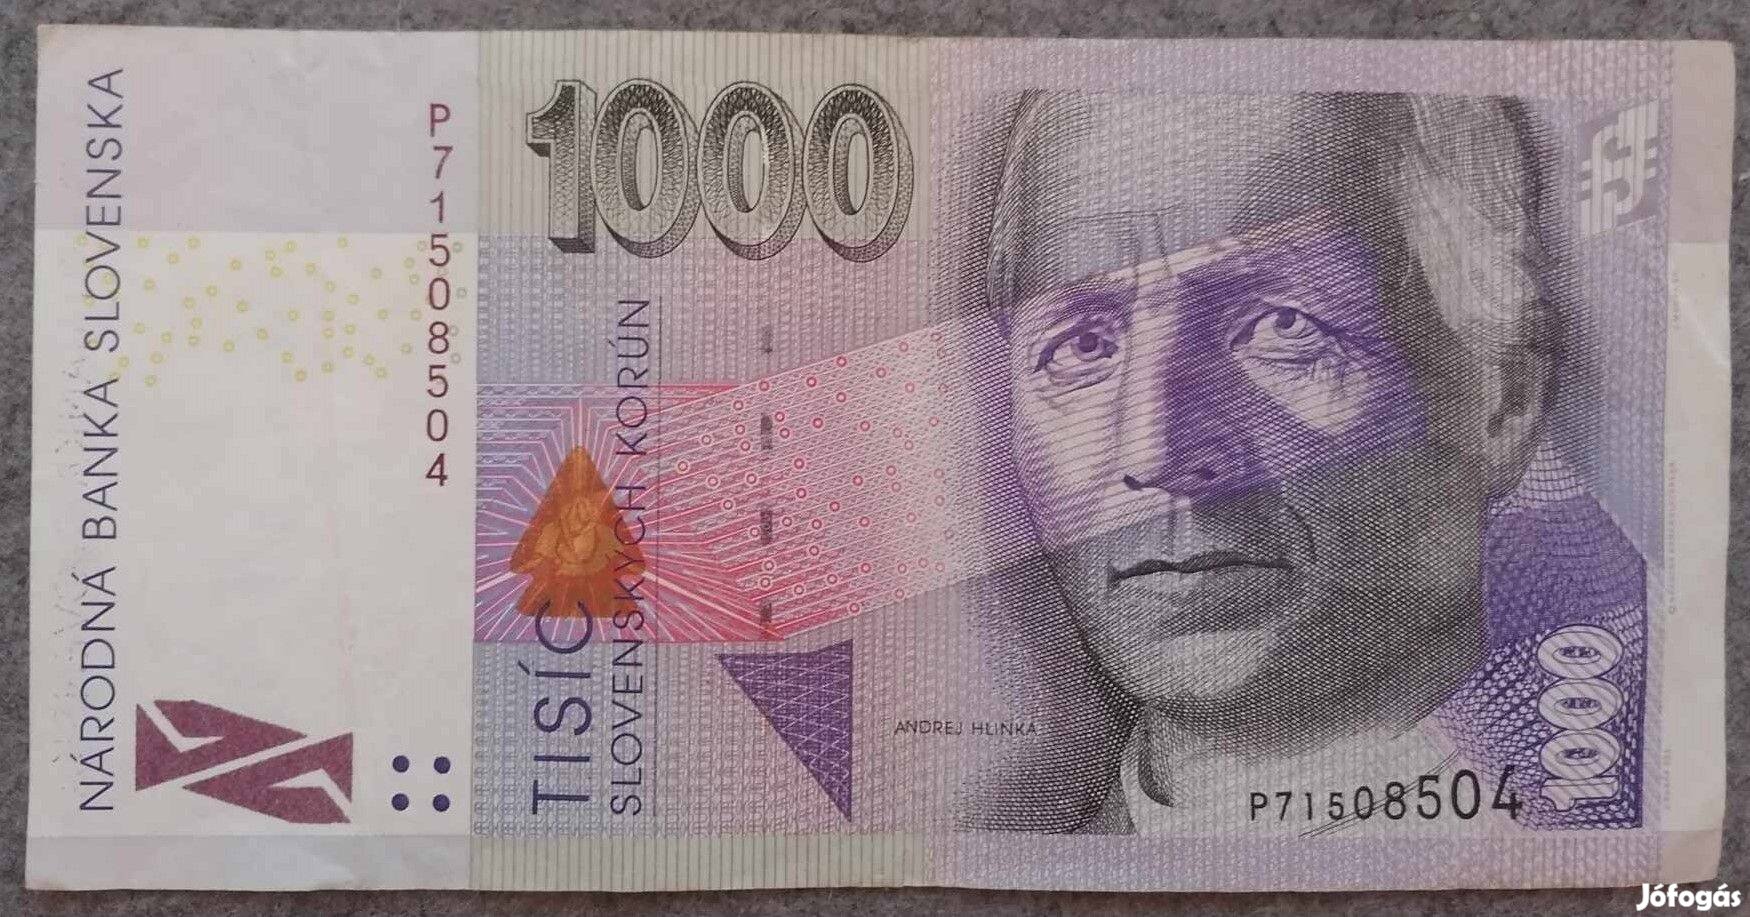 Szlovákia 1000 korona 2005 P széria VF